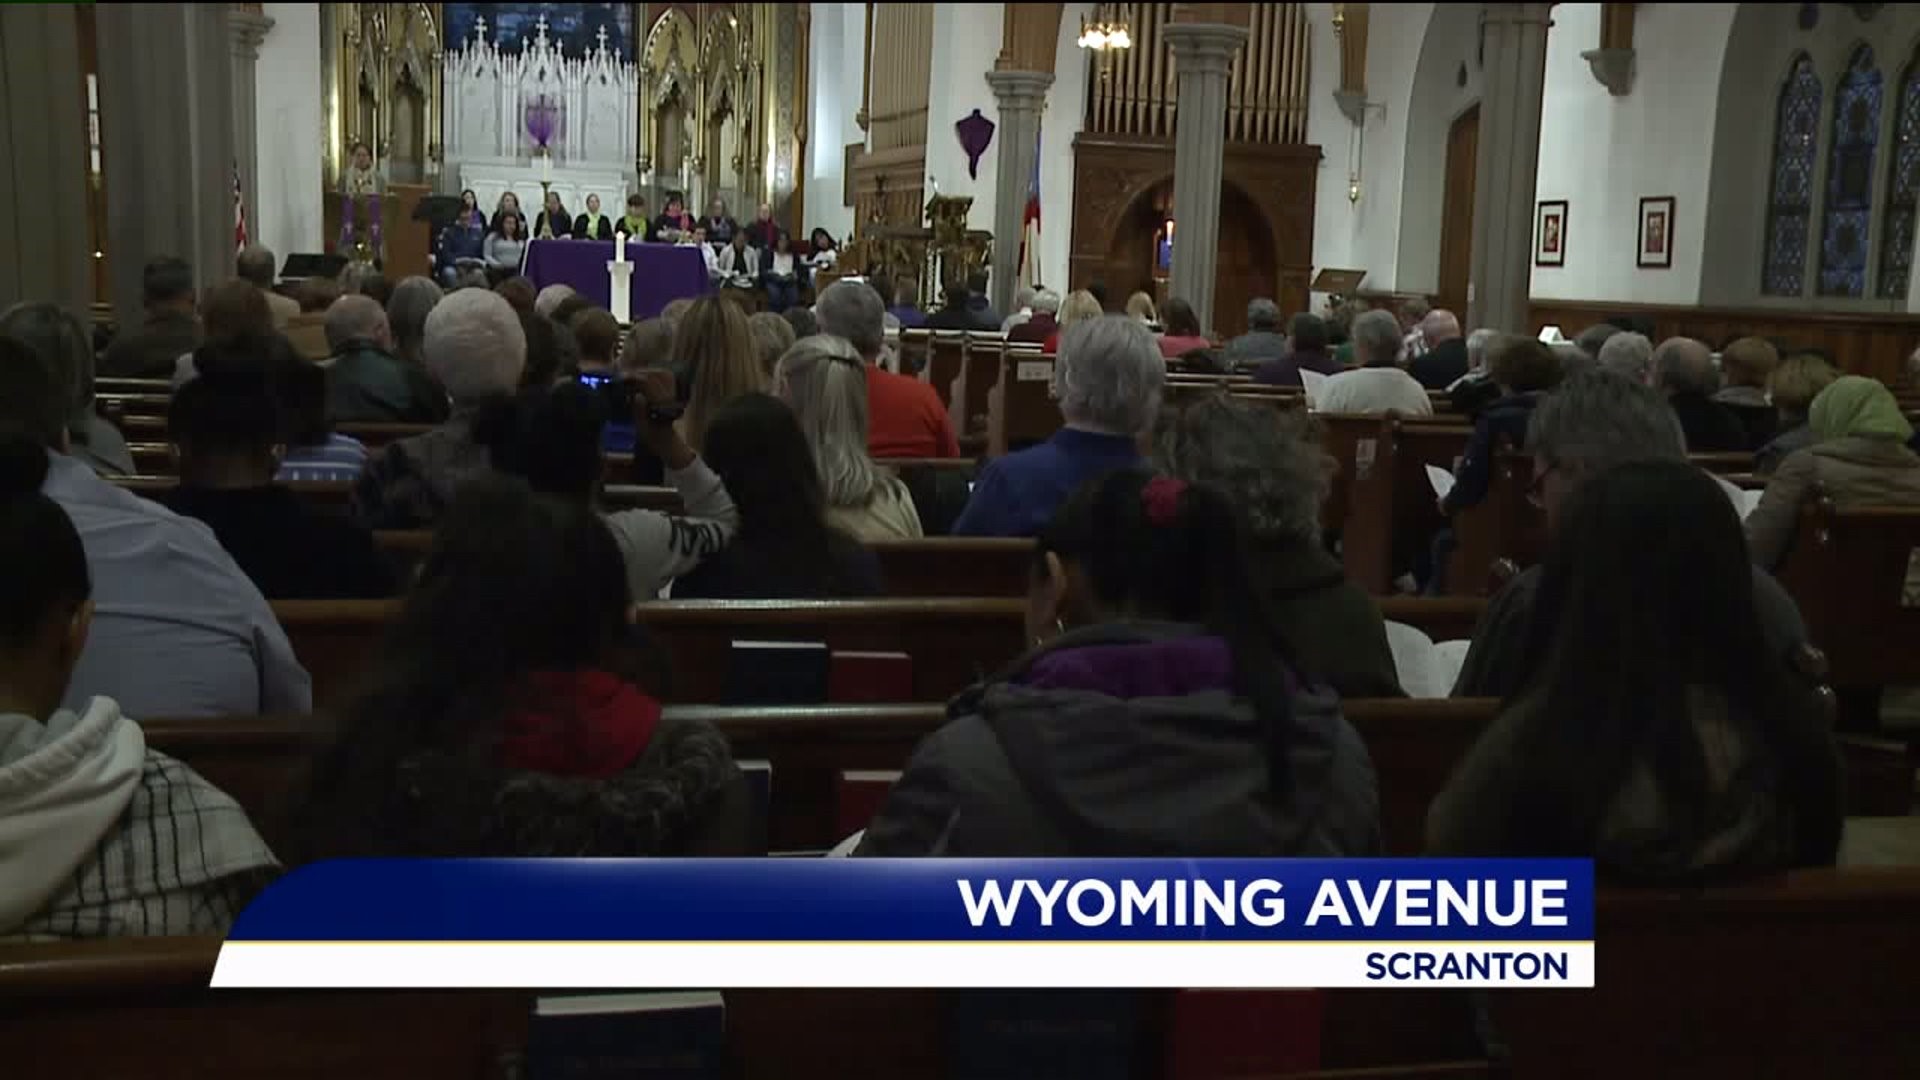 Prayer Vigil Held in Scranton